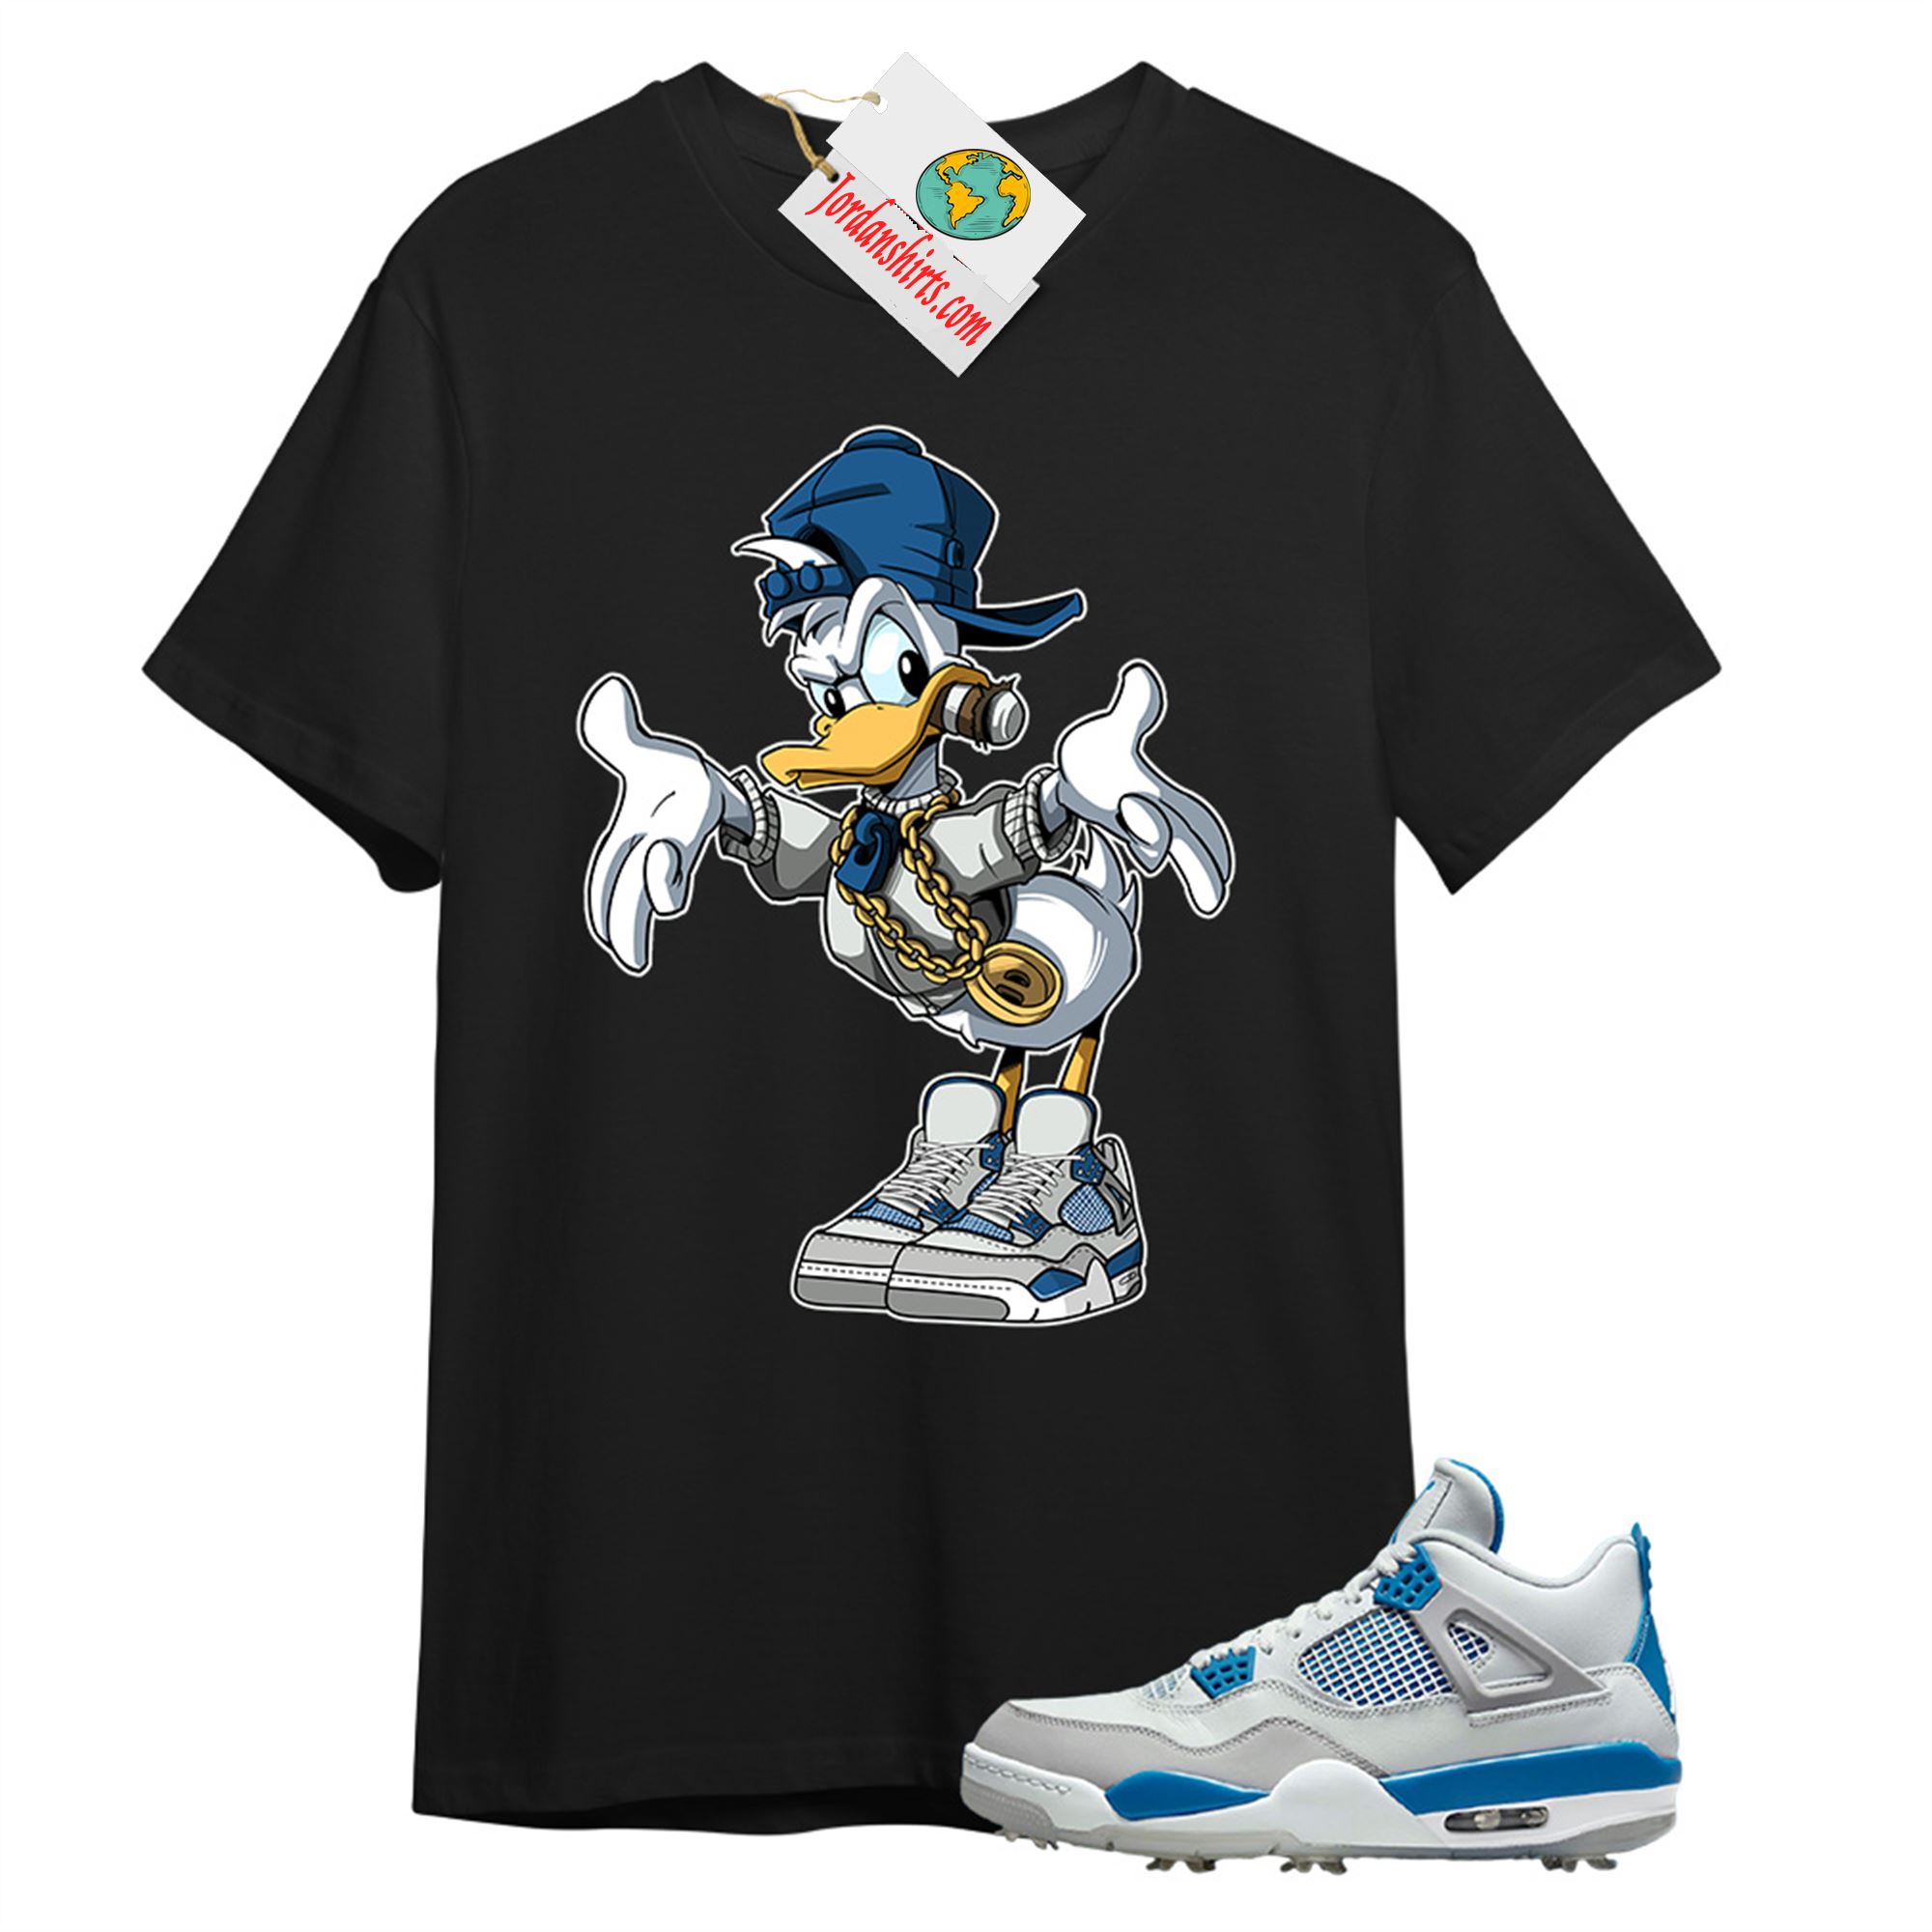 Jordan 4 Shirt, Donald Duck Black T-shirt Air Jordan 4 Golf Military Blue 4s Plus Size Up To 5xl